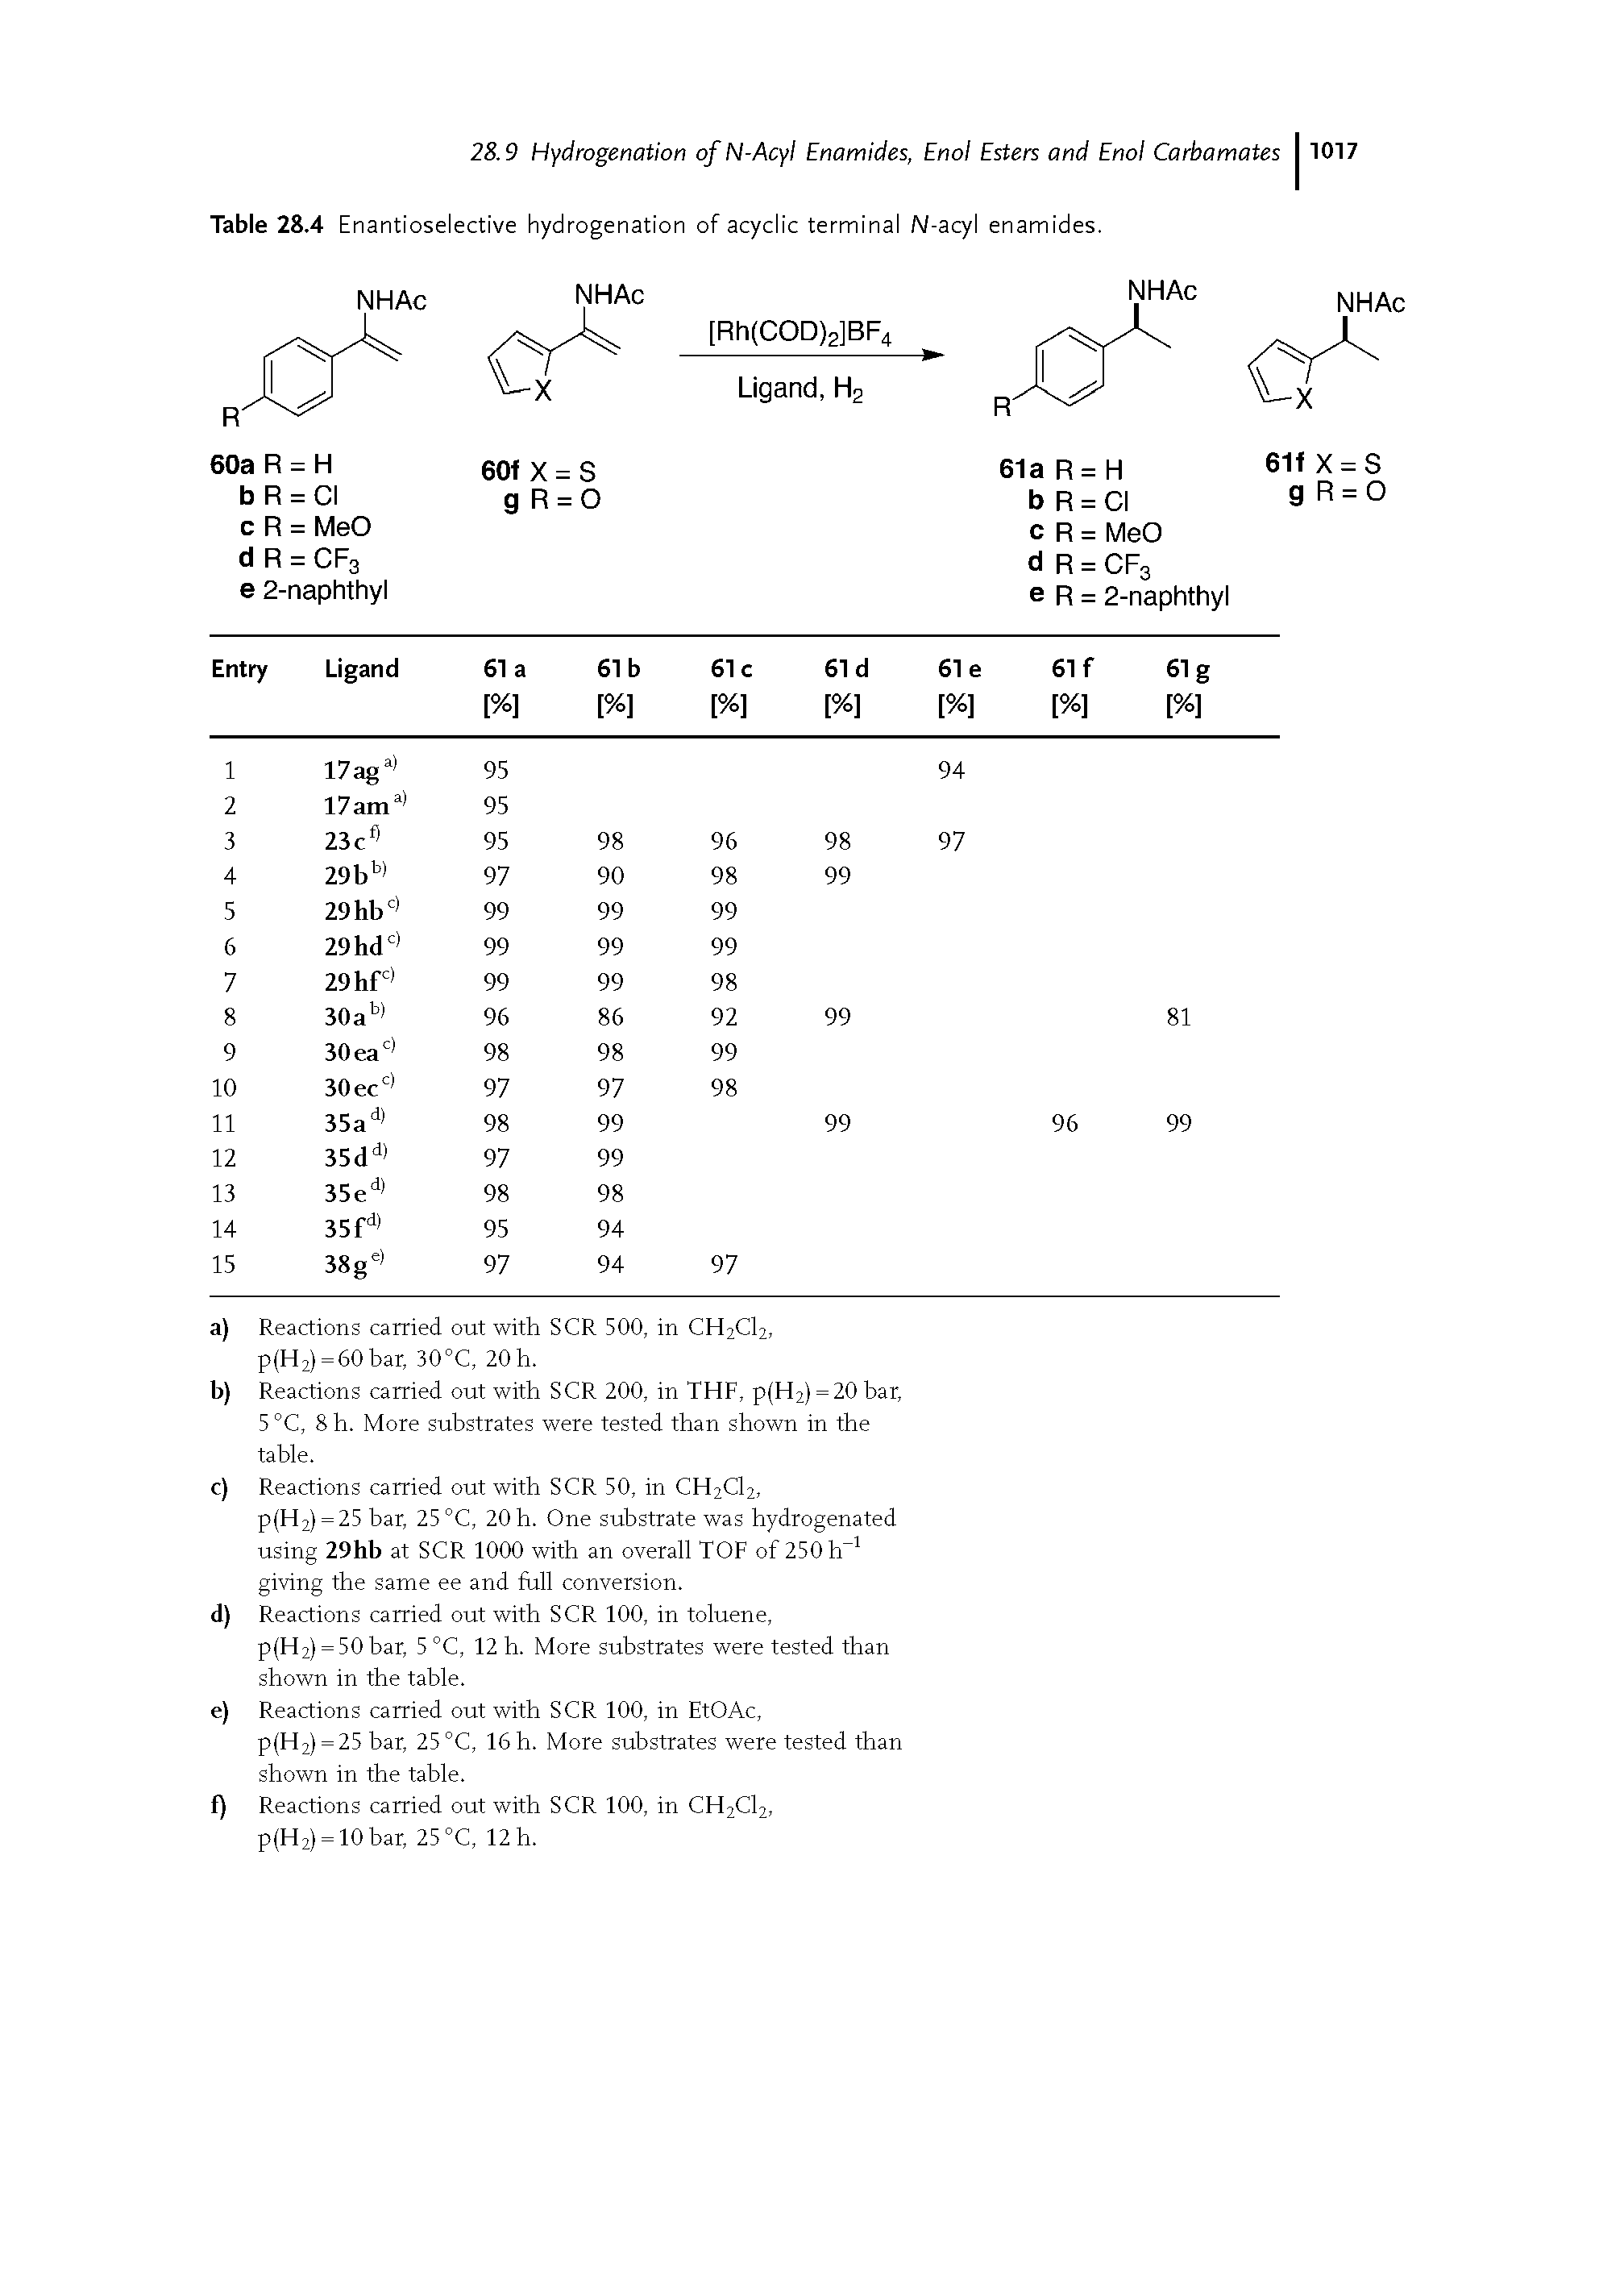 Table 28.4 Enantioselective hydrogenation of acyclic terminal N-acyl enamides.